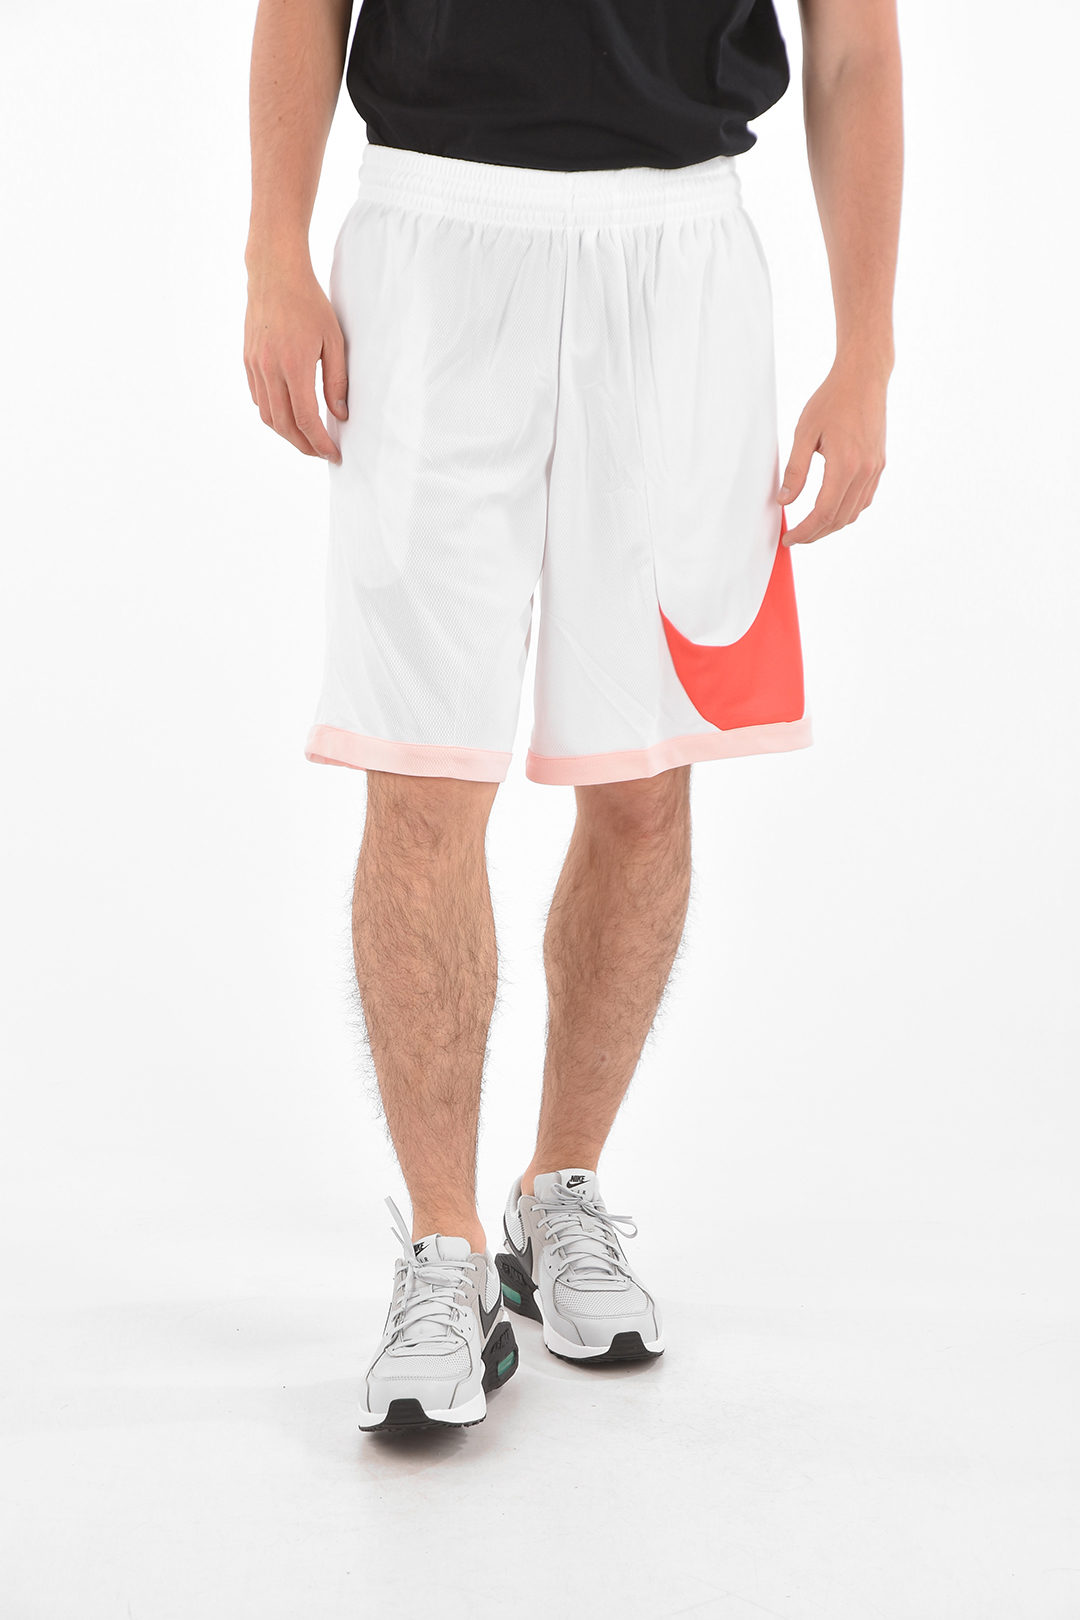 Arcaico salida Excelente Nike Loose Fit Shorts men - Glamood Outlet